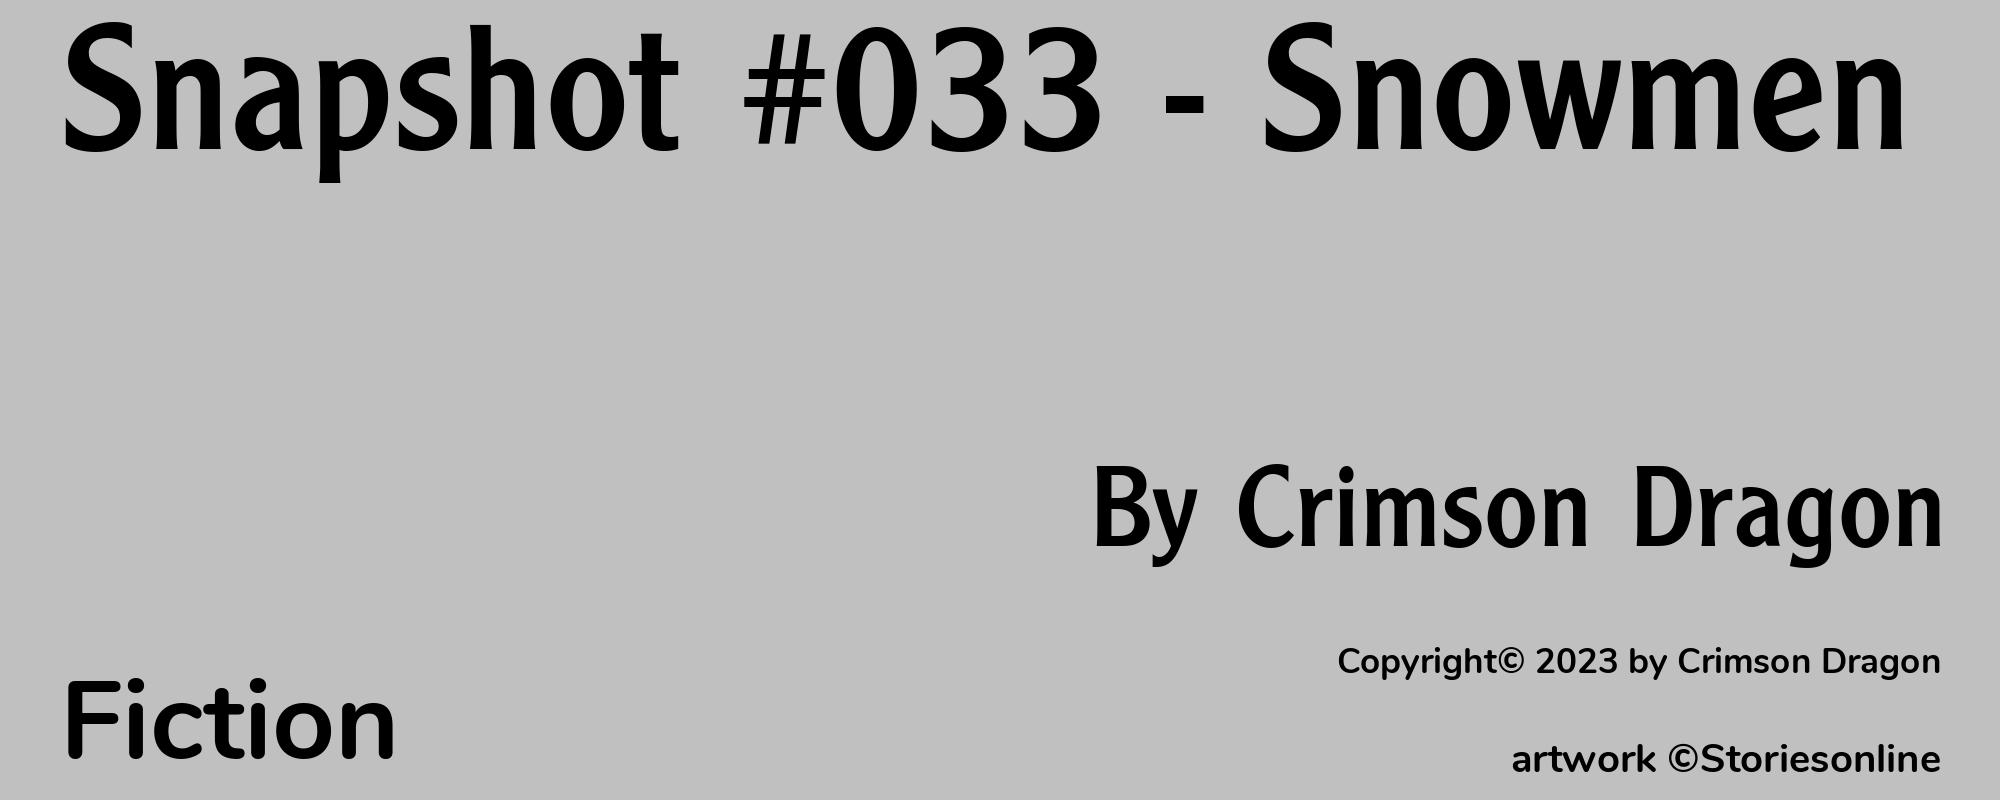 Snapshot #033 - Snowmen - Cover